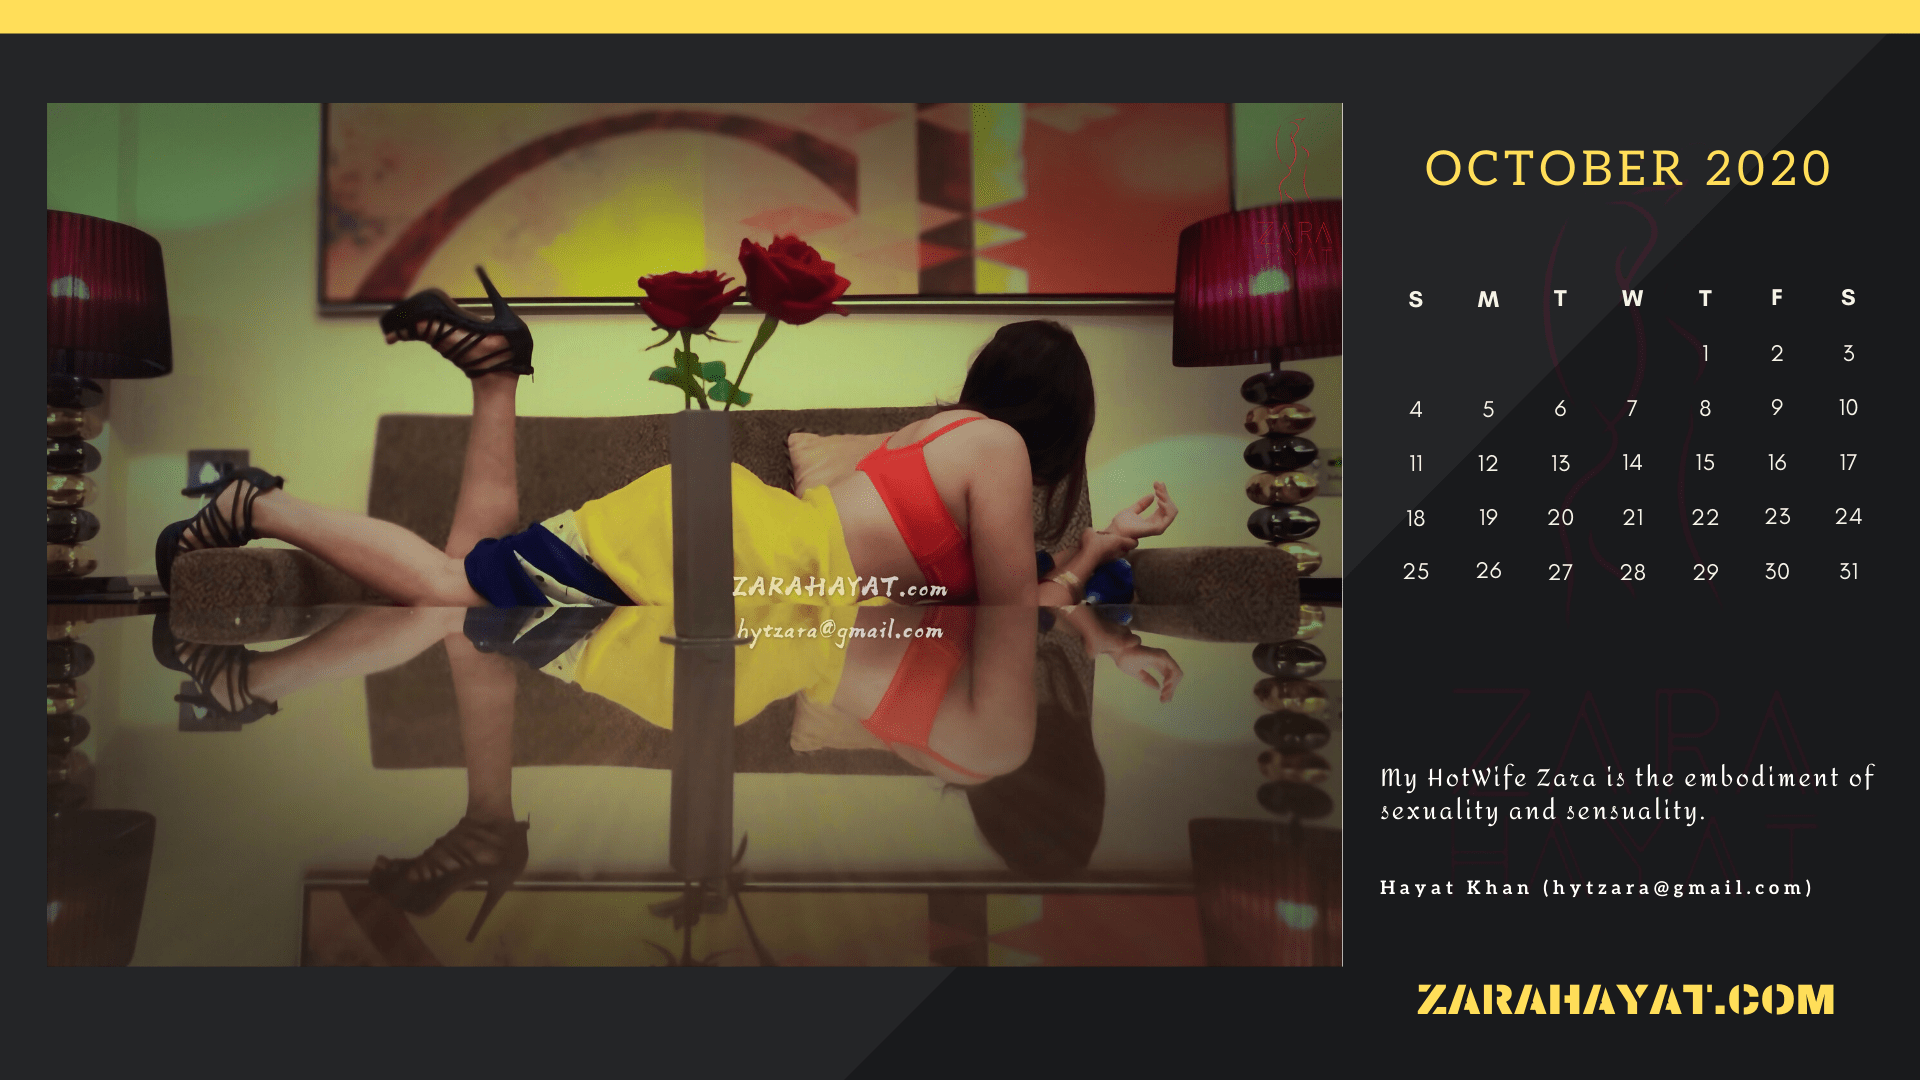 October 2020 Calendar Hot Wife Zara Hayat